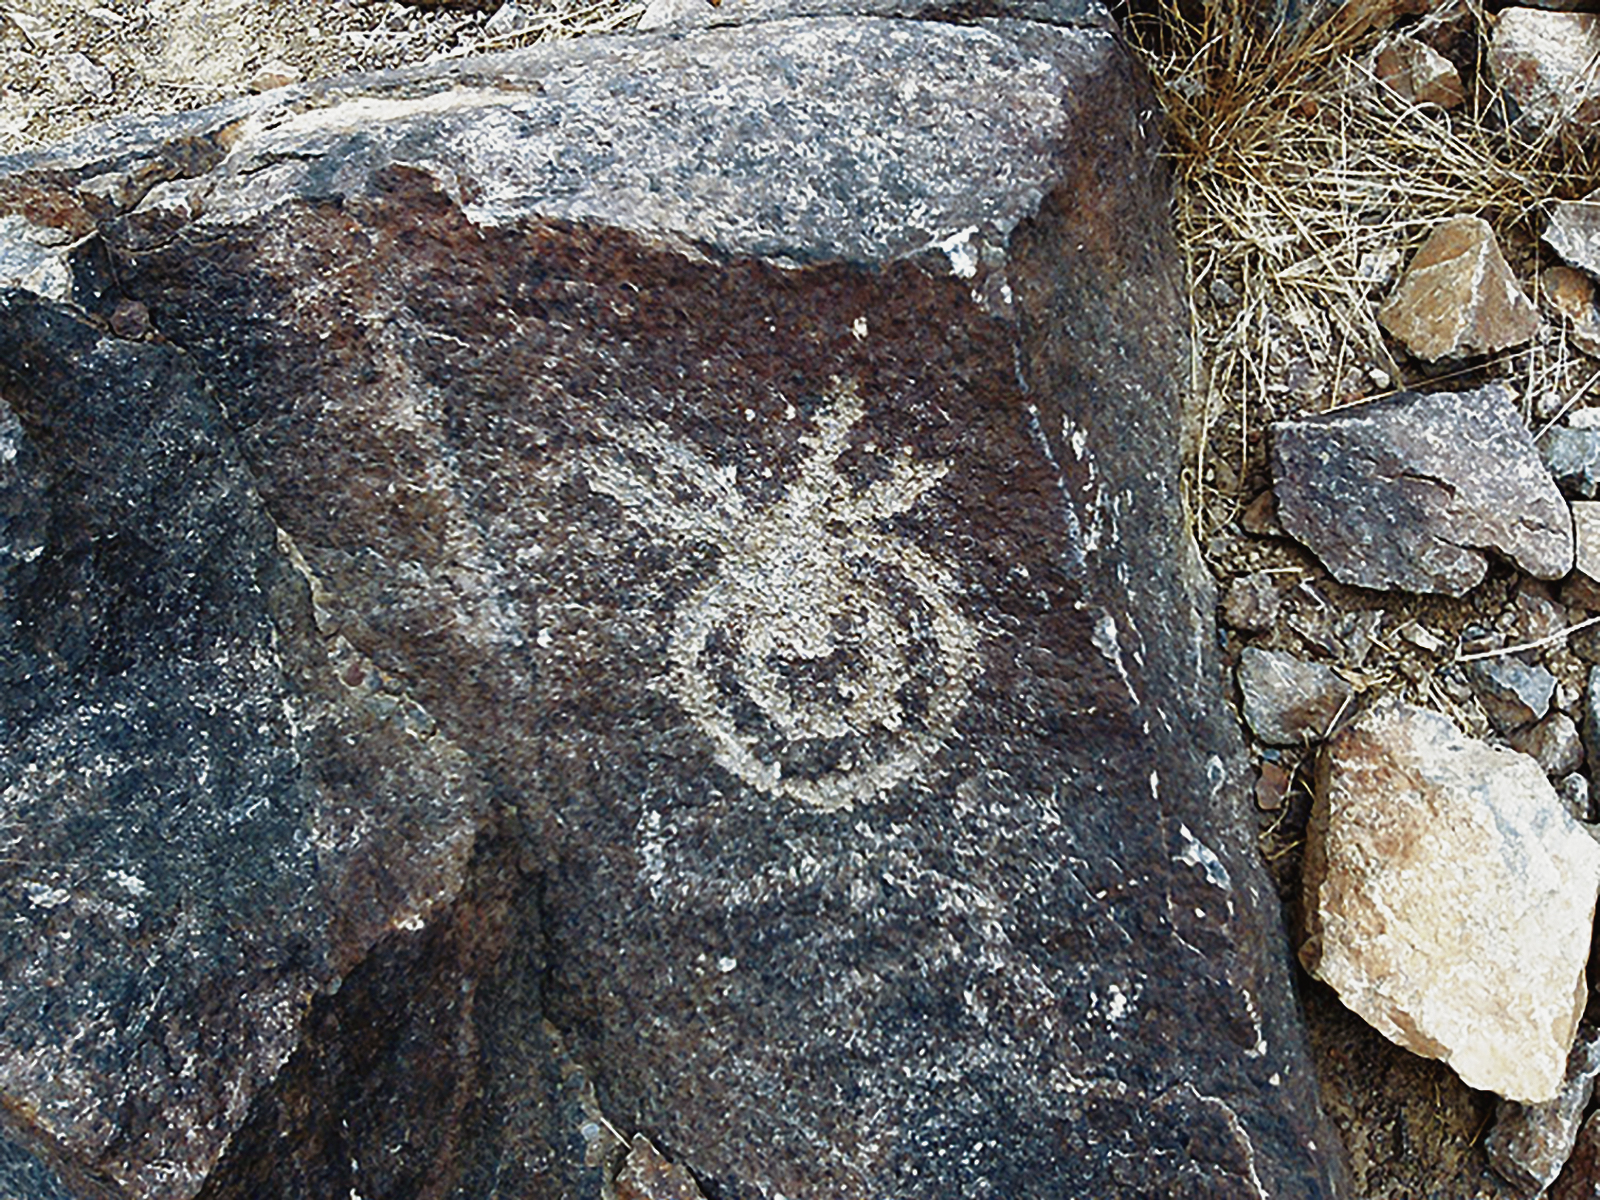 Petroglyph Rock Art Checta Peru